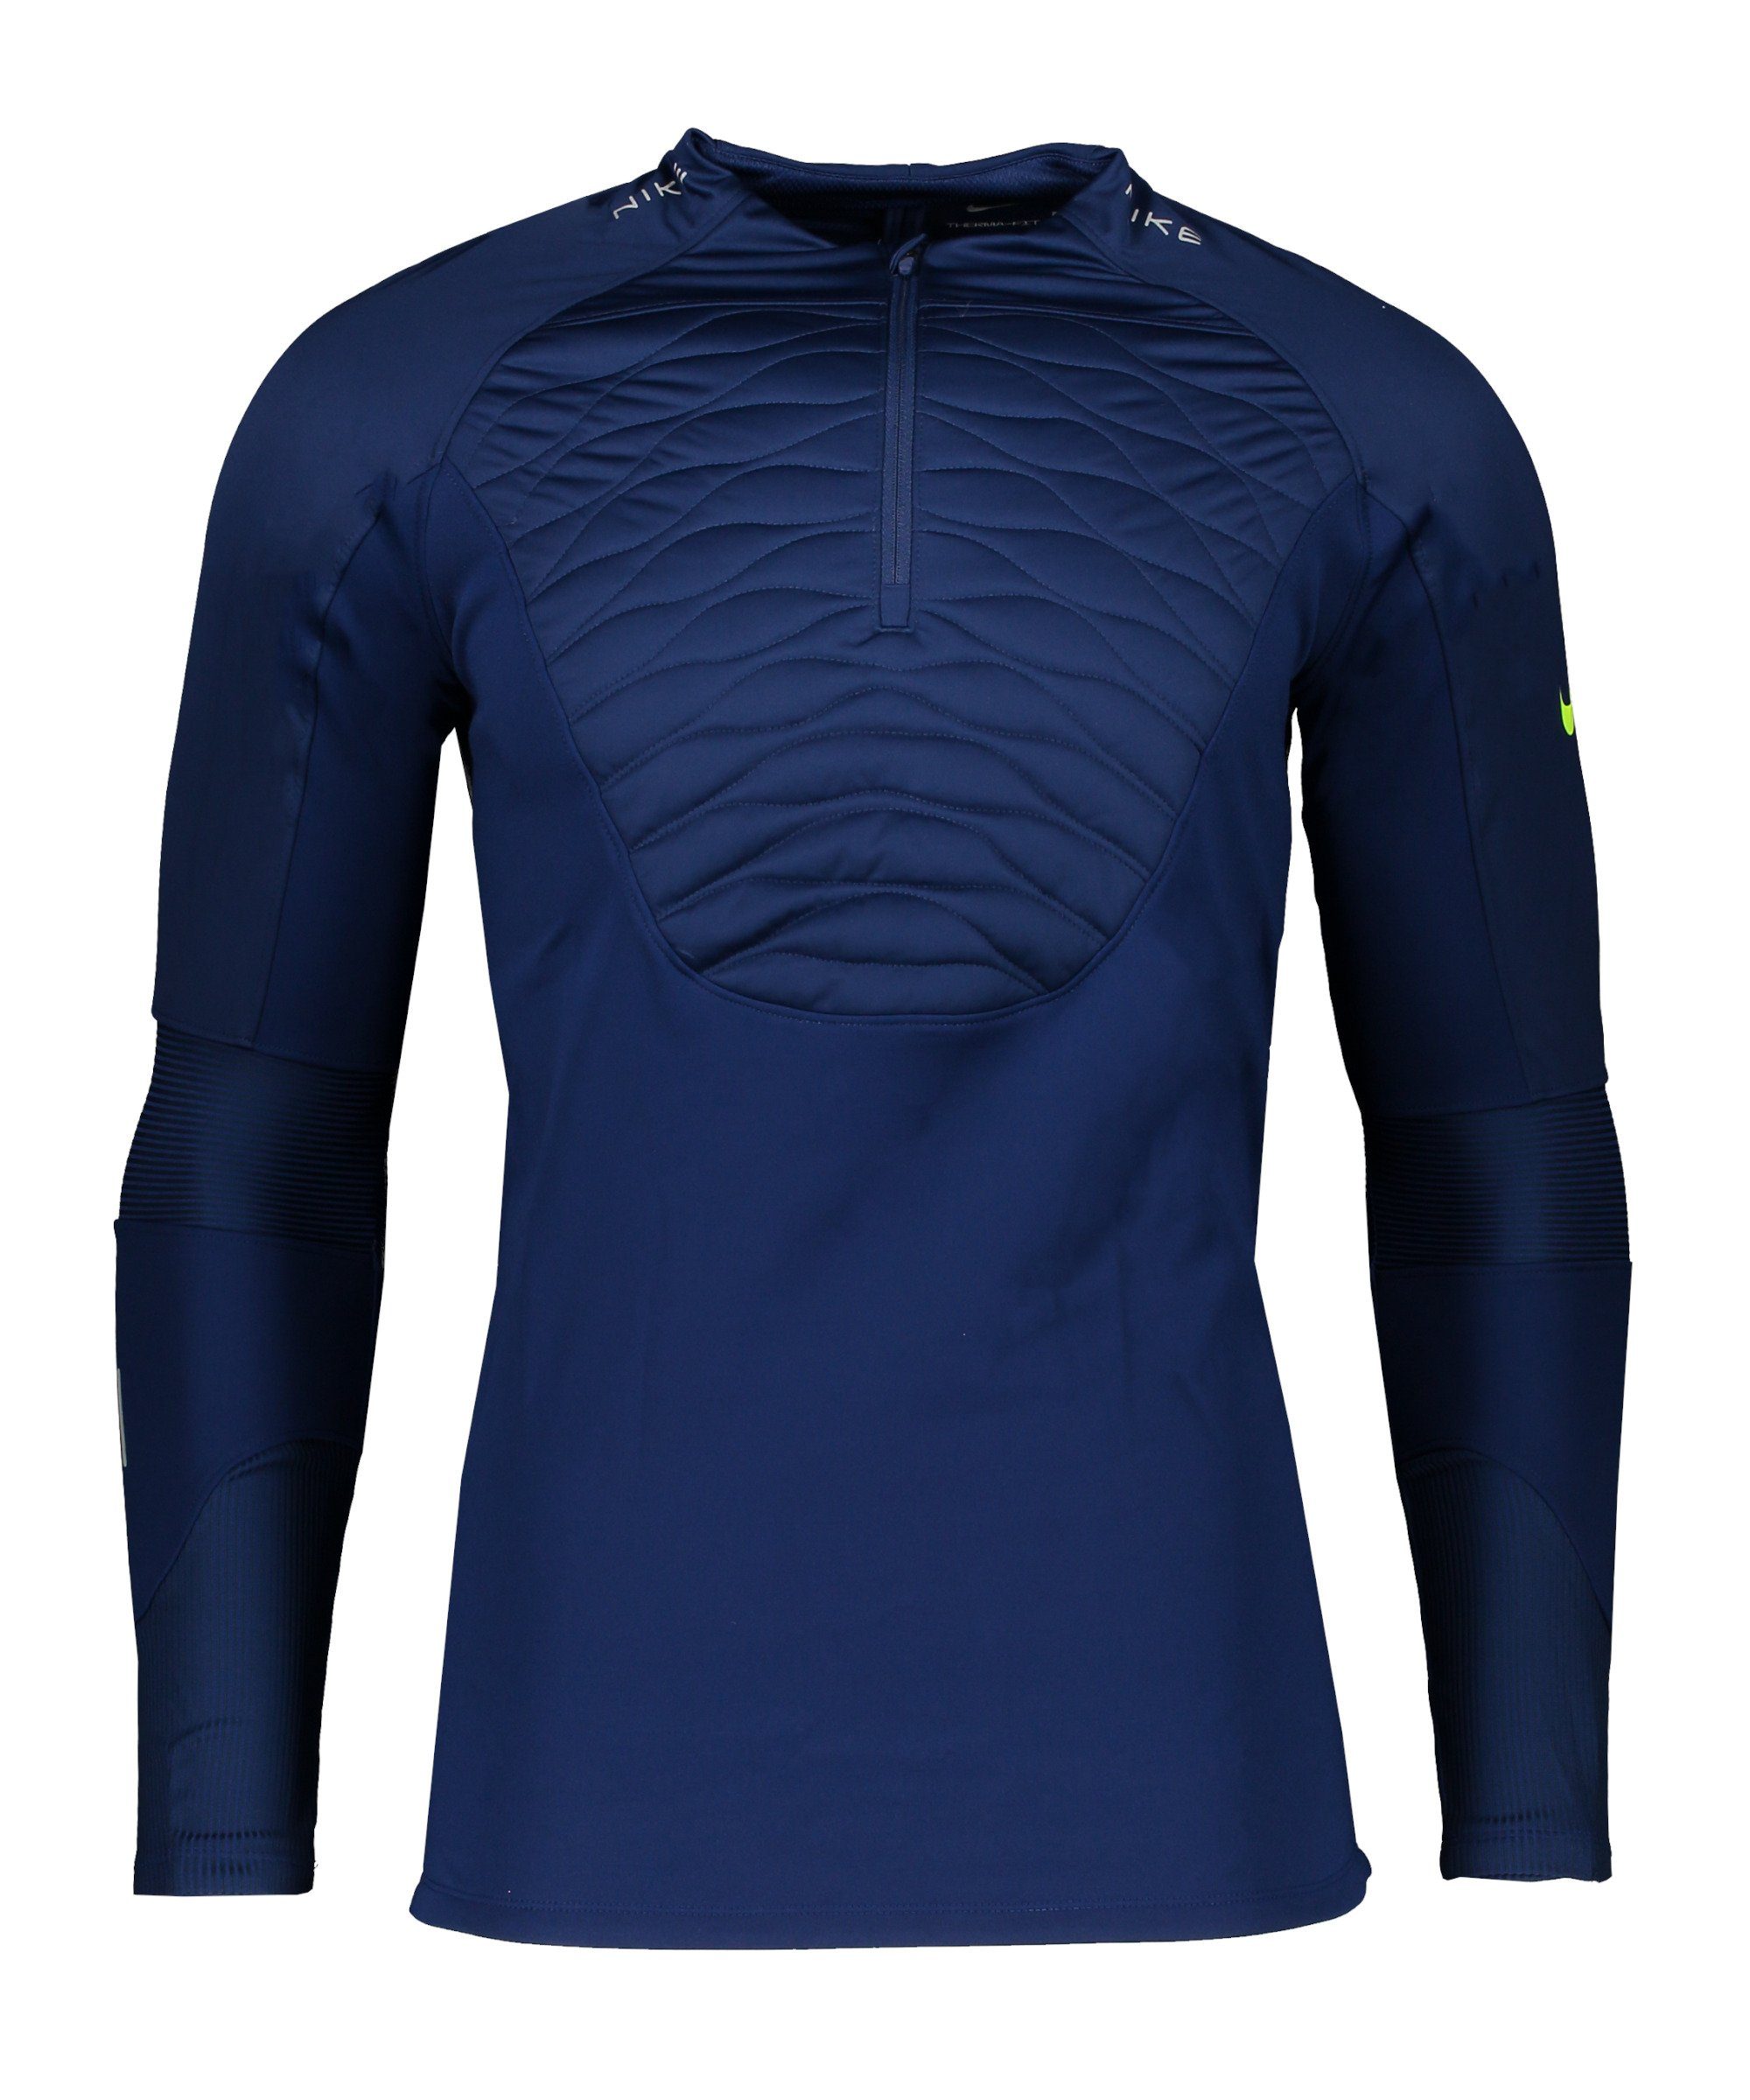 Winter Sweater blau Therma-FIT Strike Sweatshirt Nike